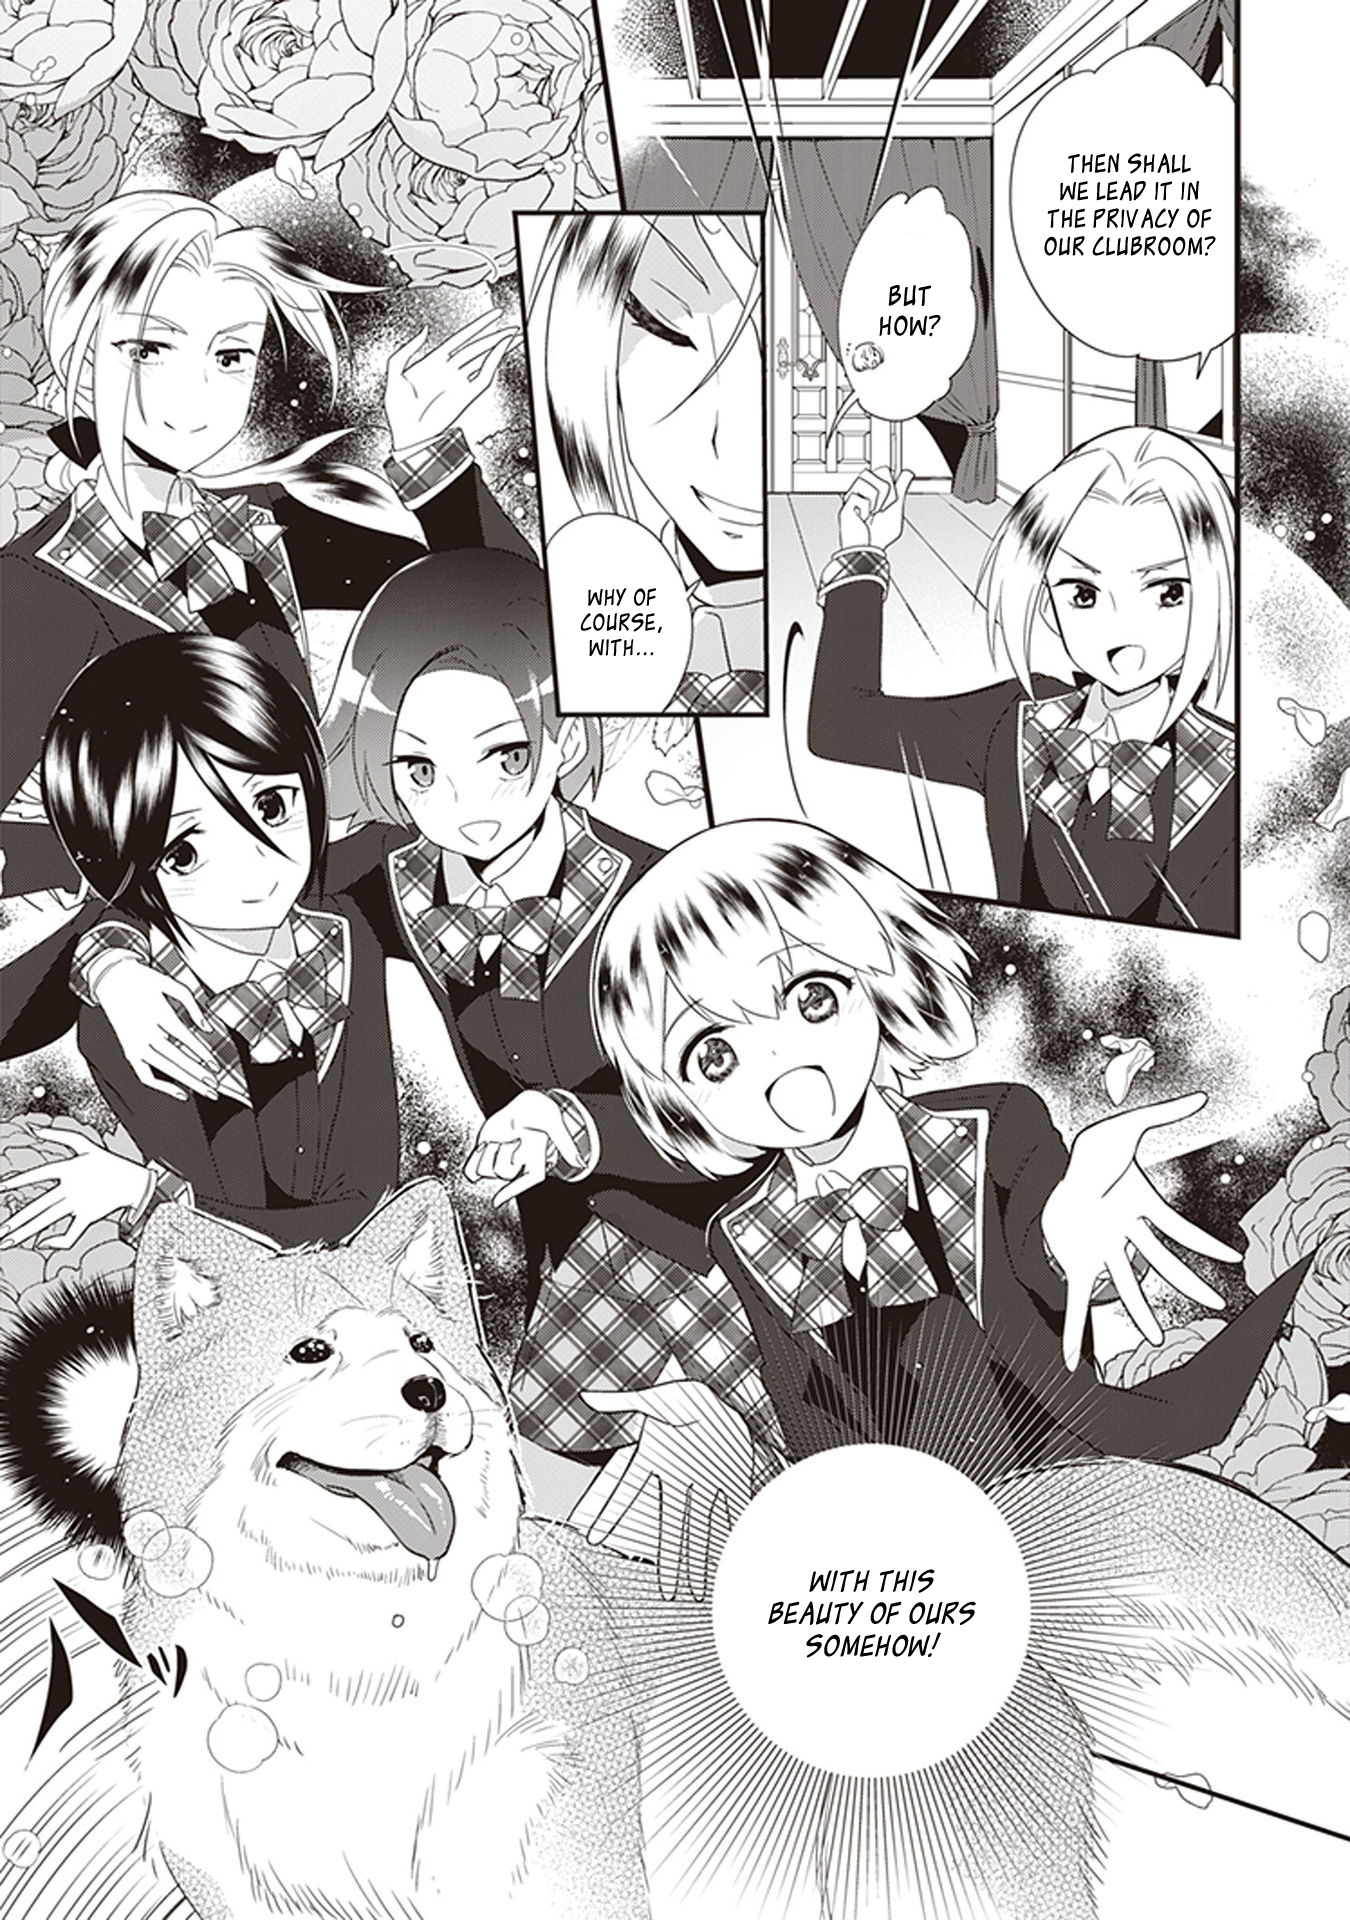 Bishounen Club No Himitsu Vol.1 Chapter 8: Even Bishounen Can Lose To Dogs - Picture 3